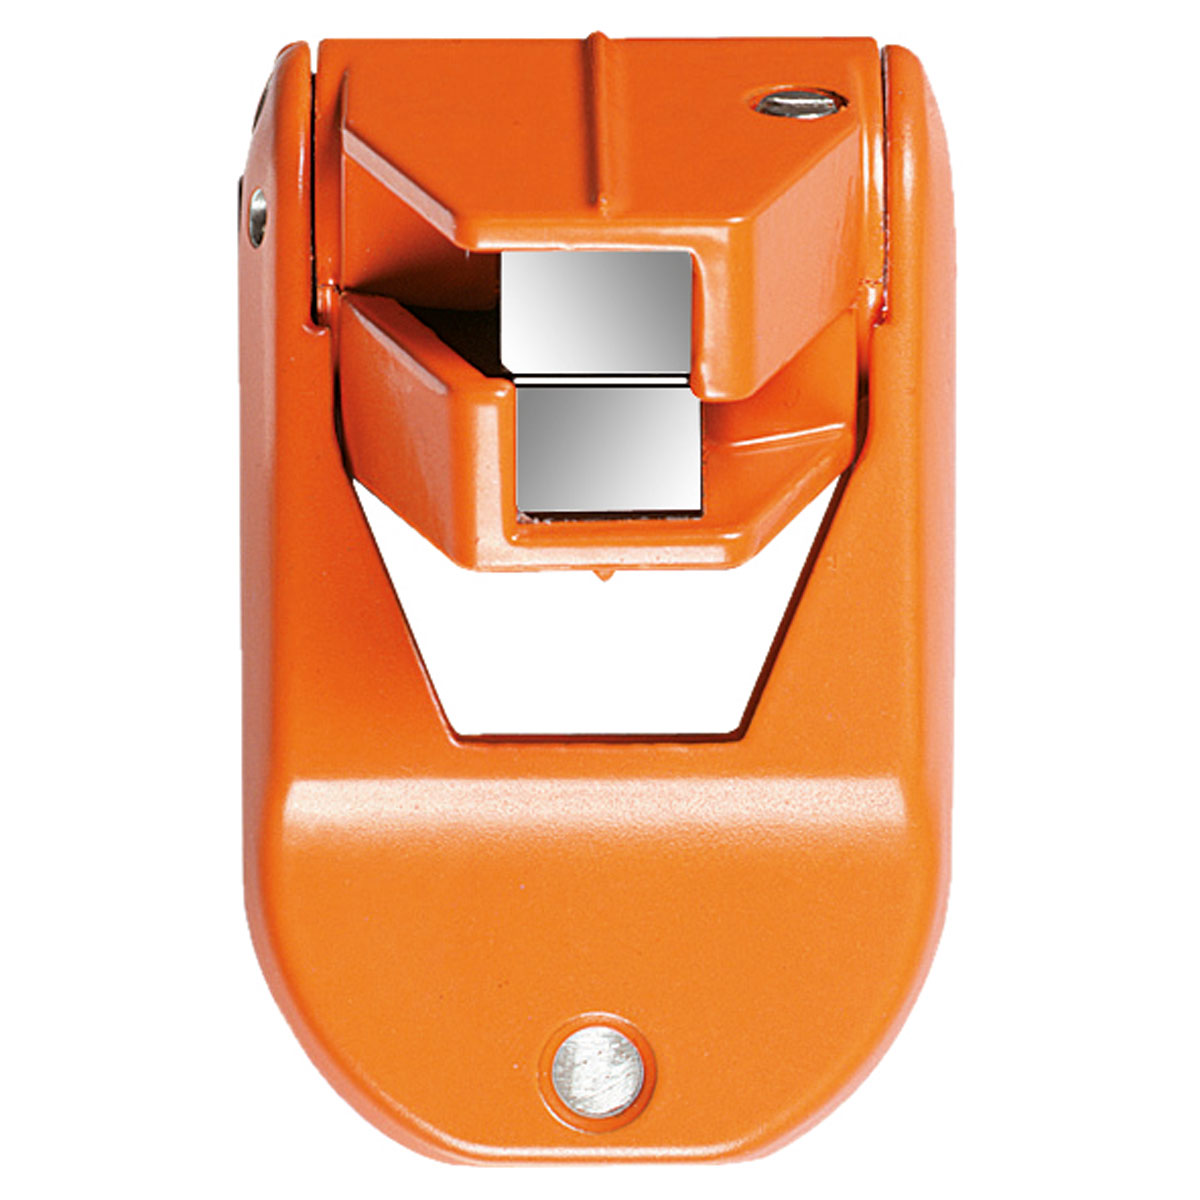 Winkelprisma GP 8 - Metallgehäuse klappbar, orange